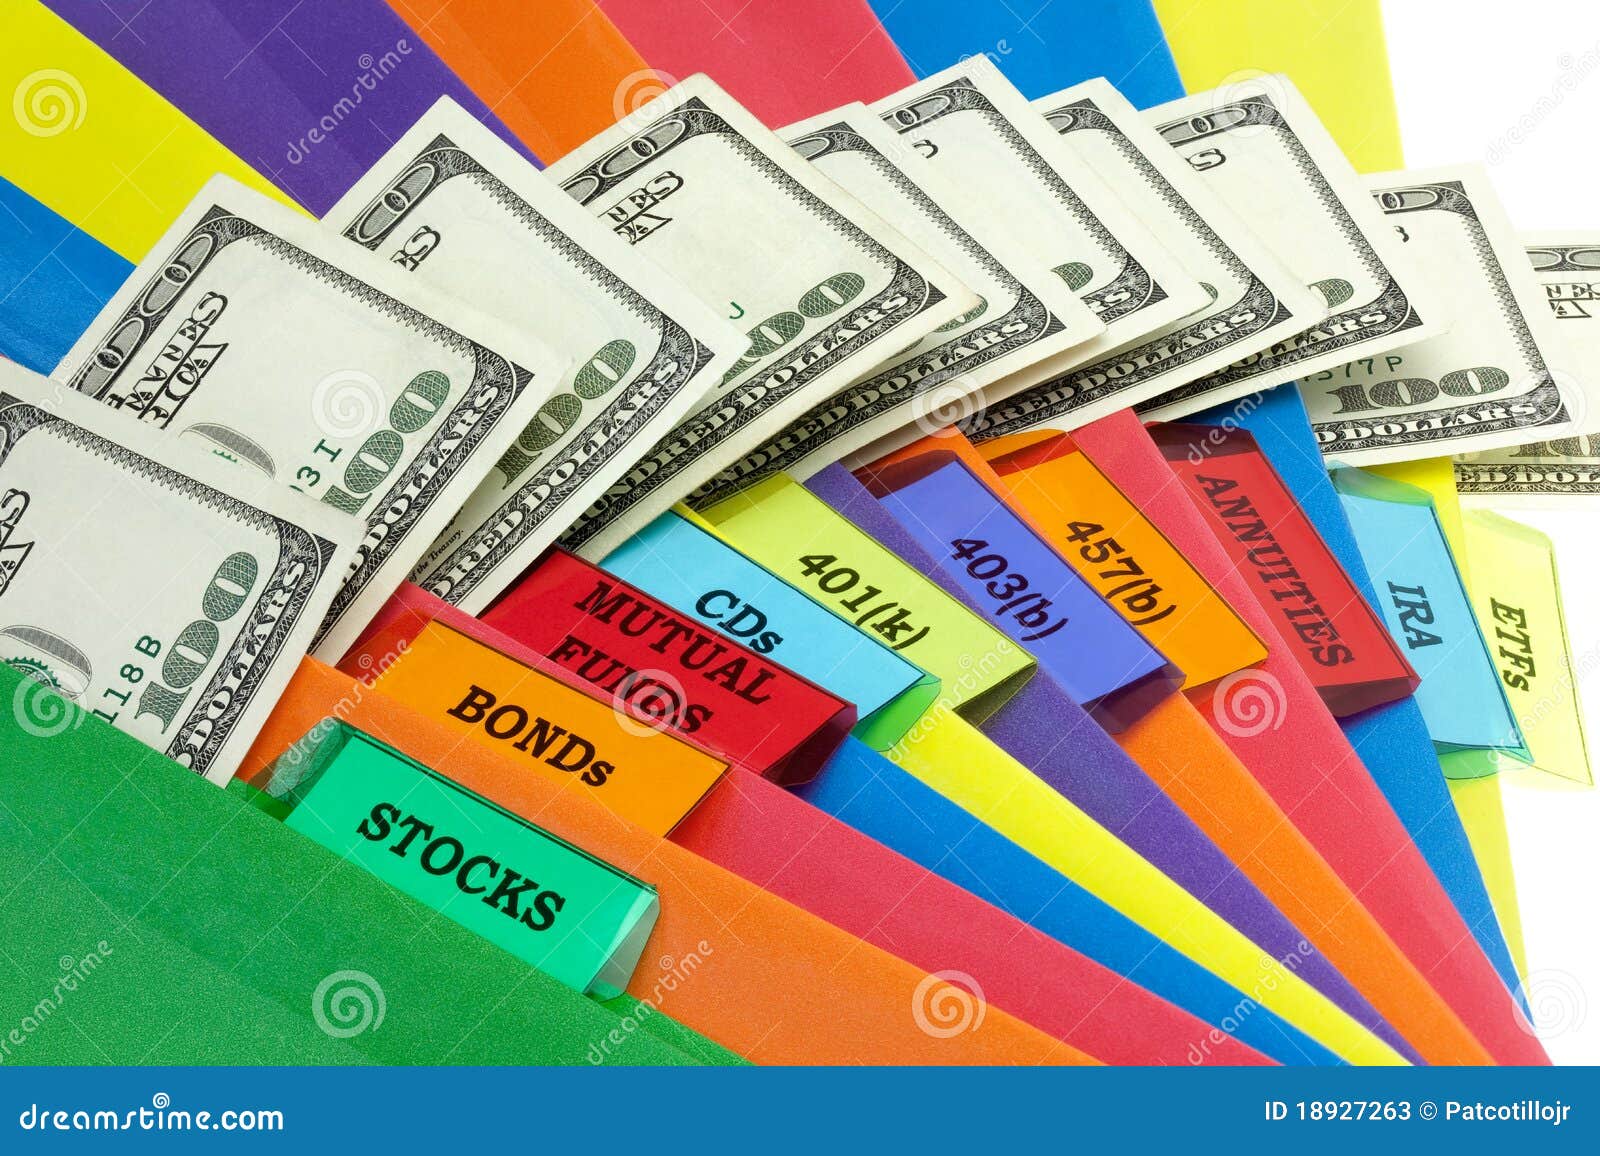 the colorful financial portfolio